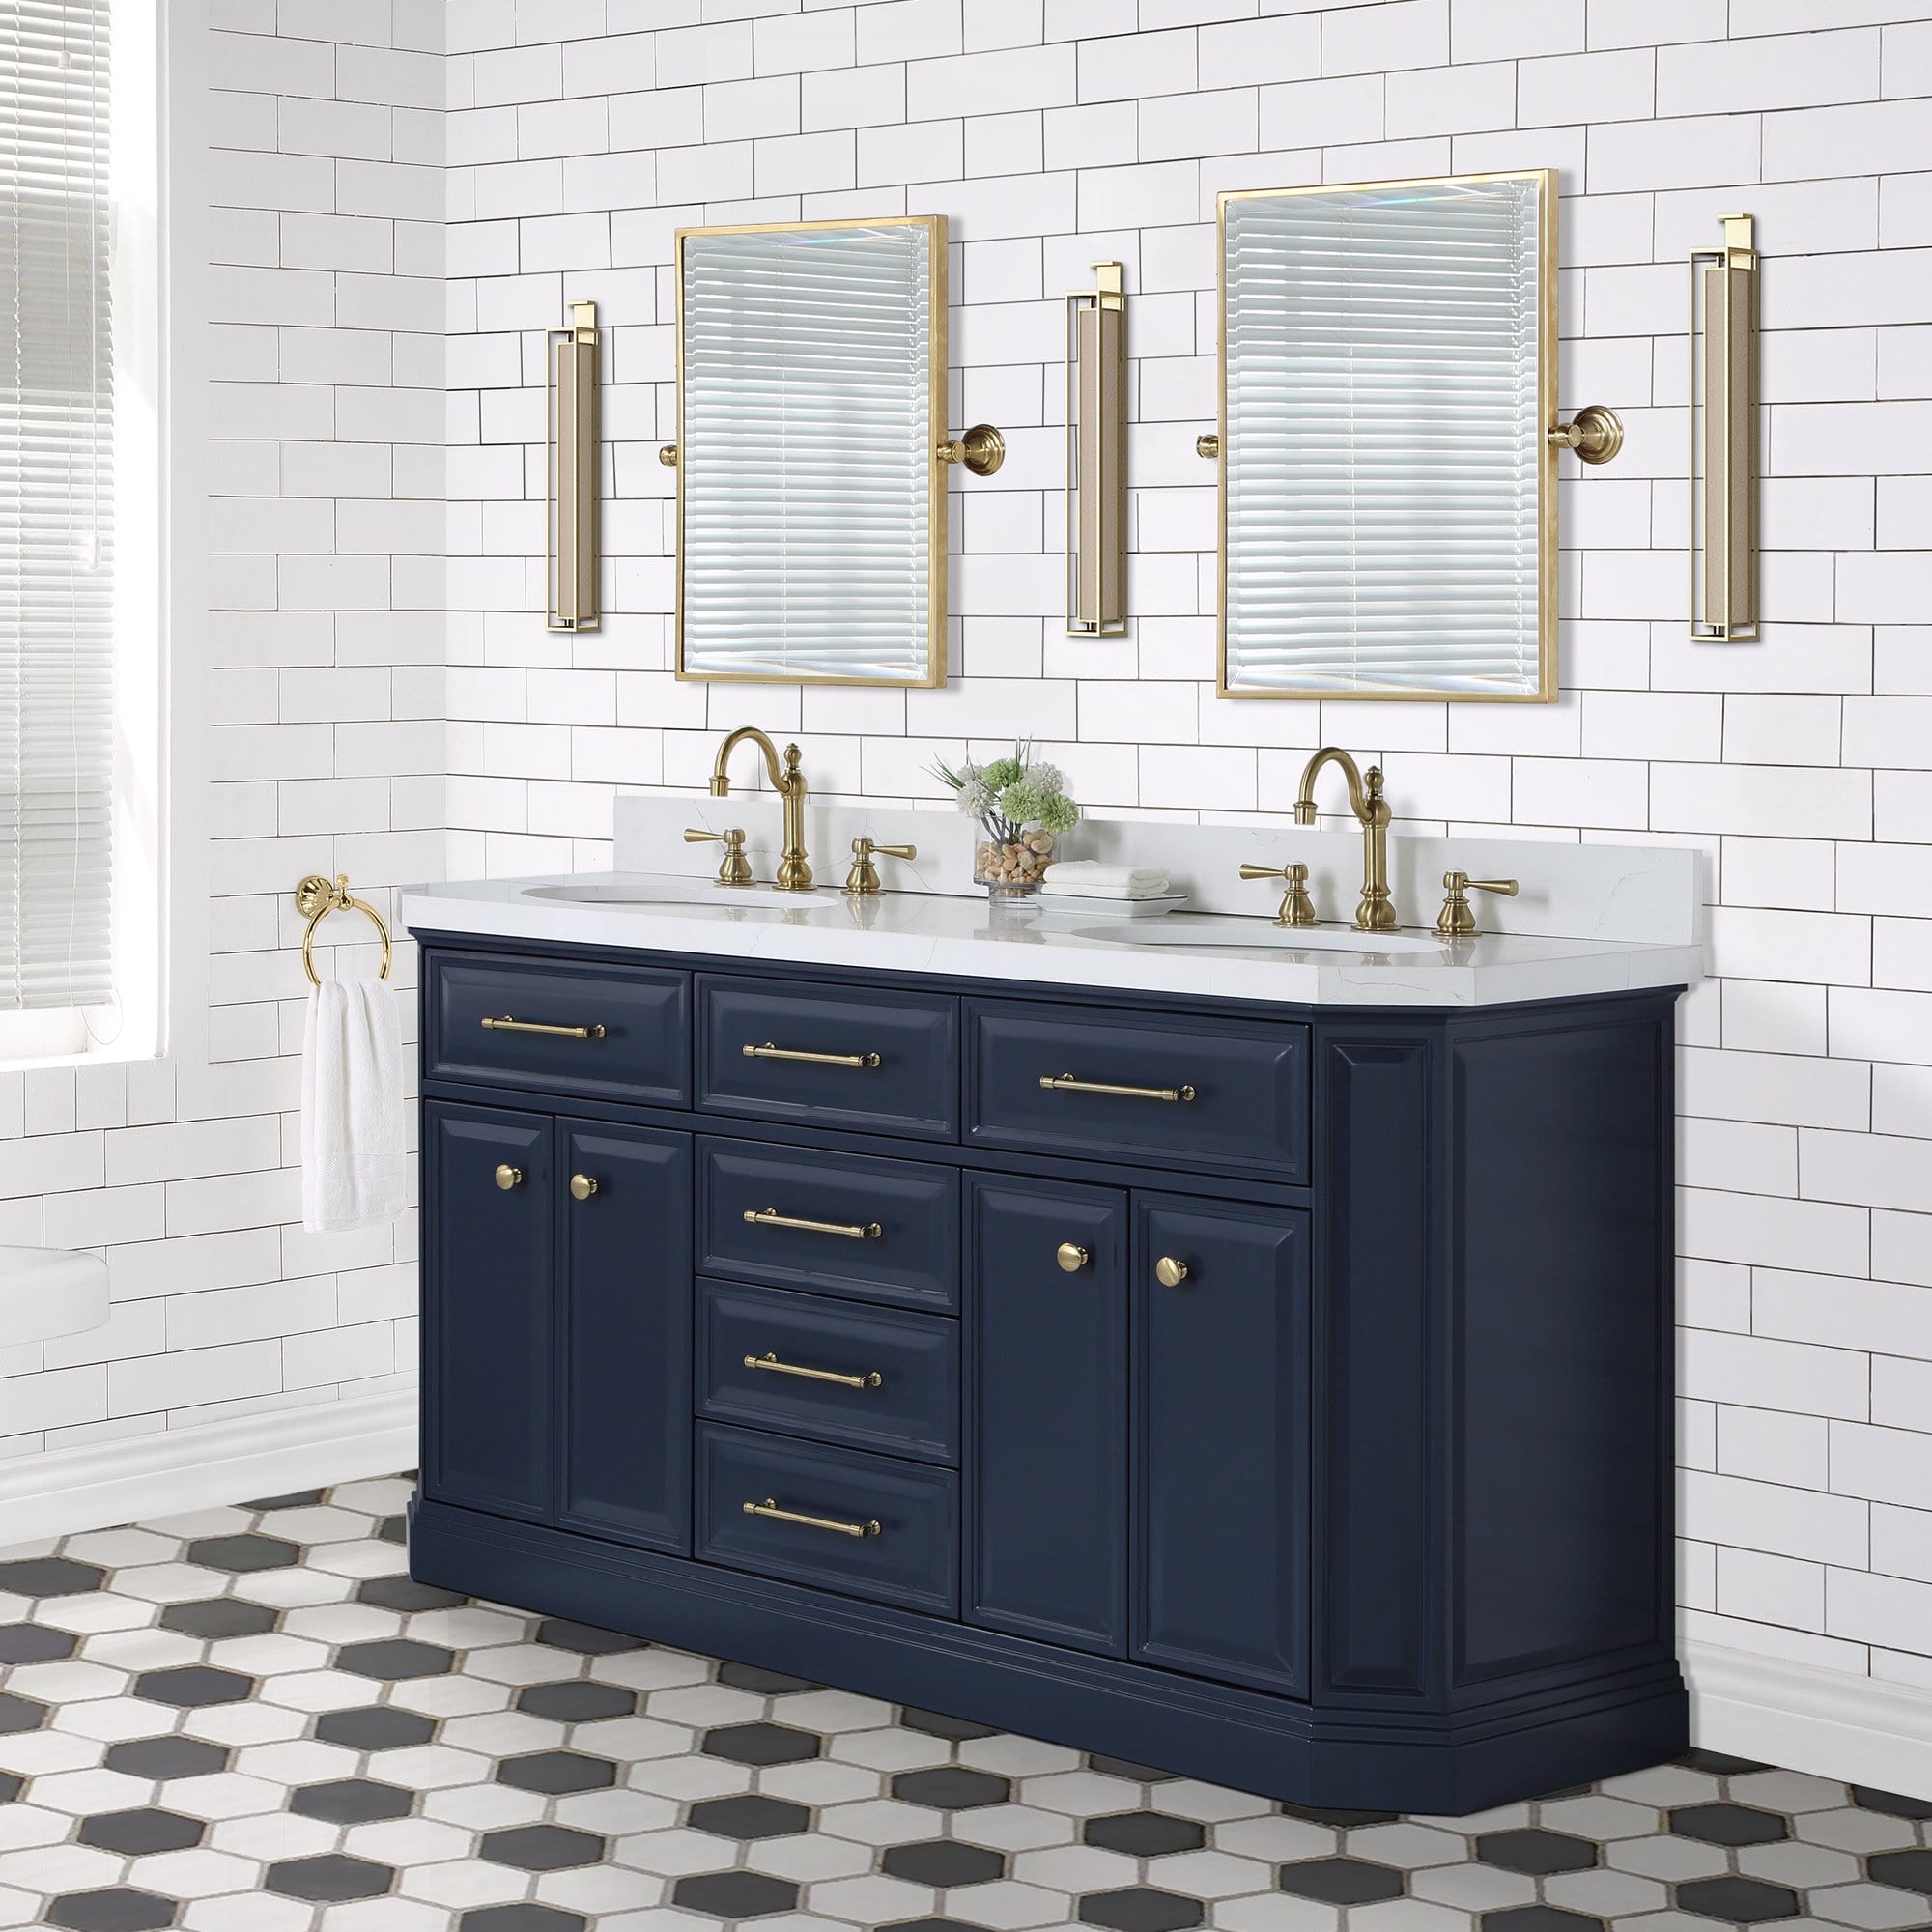 Water Creation Palace 60 In. Double Sink White Quartz Countertop Vanity in Monarch Blue - Molaix732030764972Bathroom vanityPA60QZ06MB-000000000